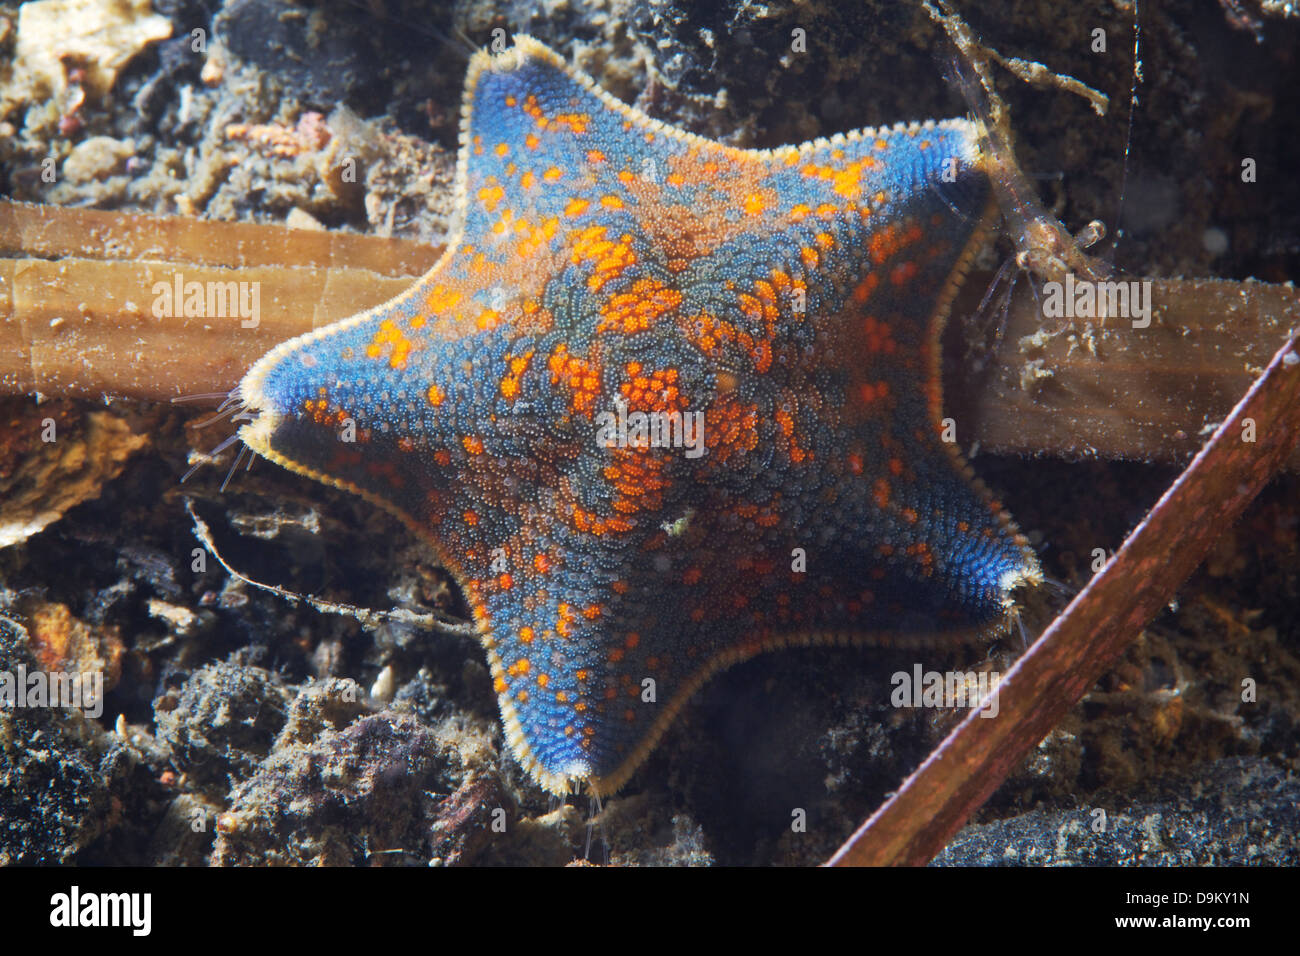 Asterina pectinifera sea star, Sea of Japan Stock Photo